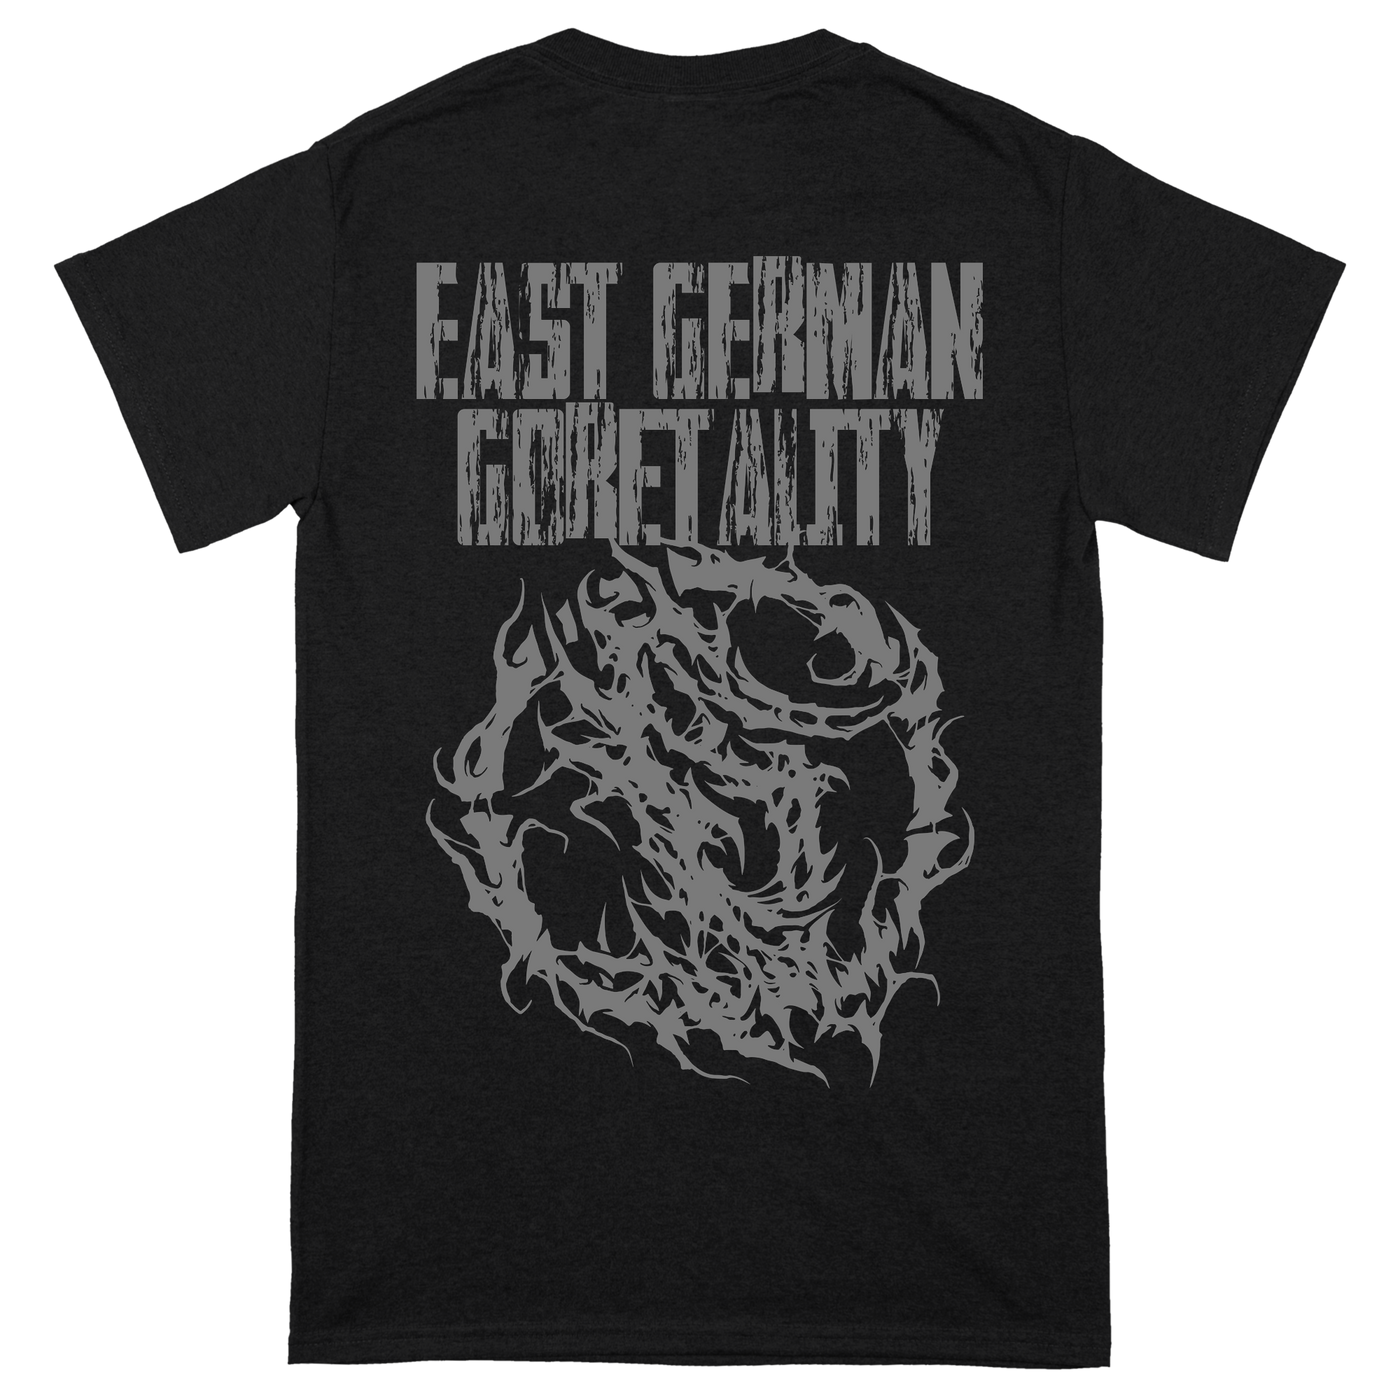 Blastocystia 'East German Goretality' T-Shirt